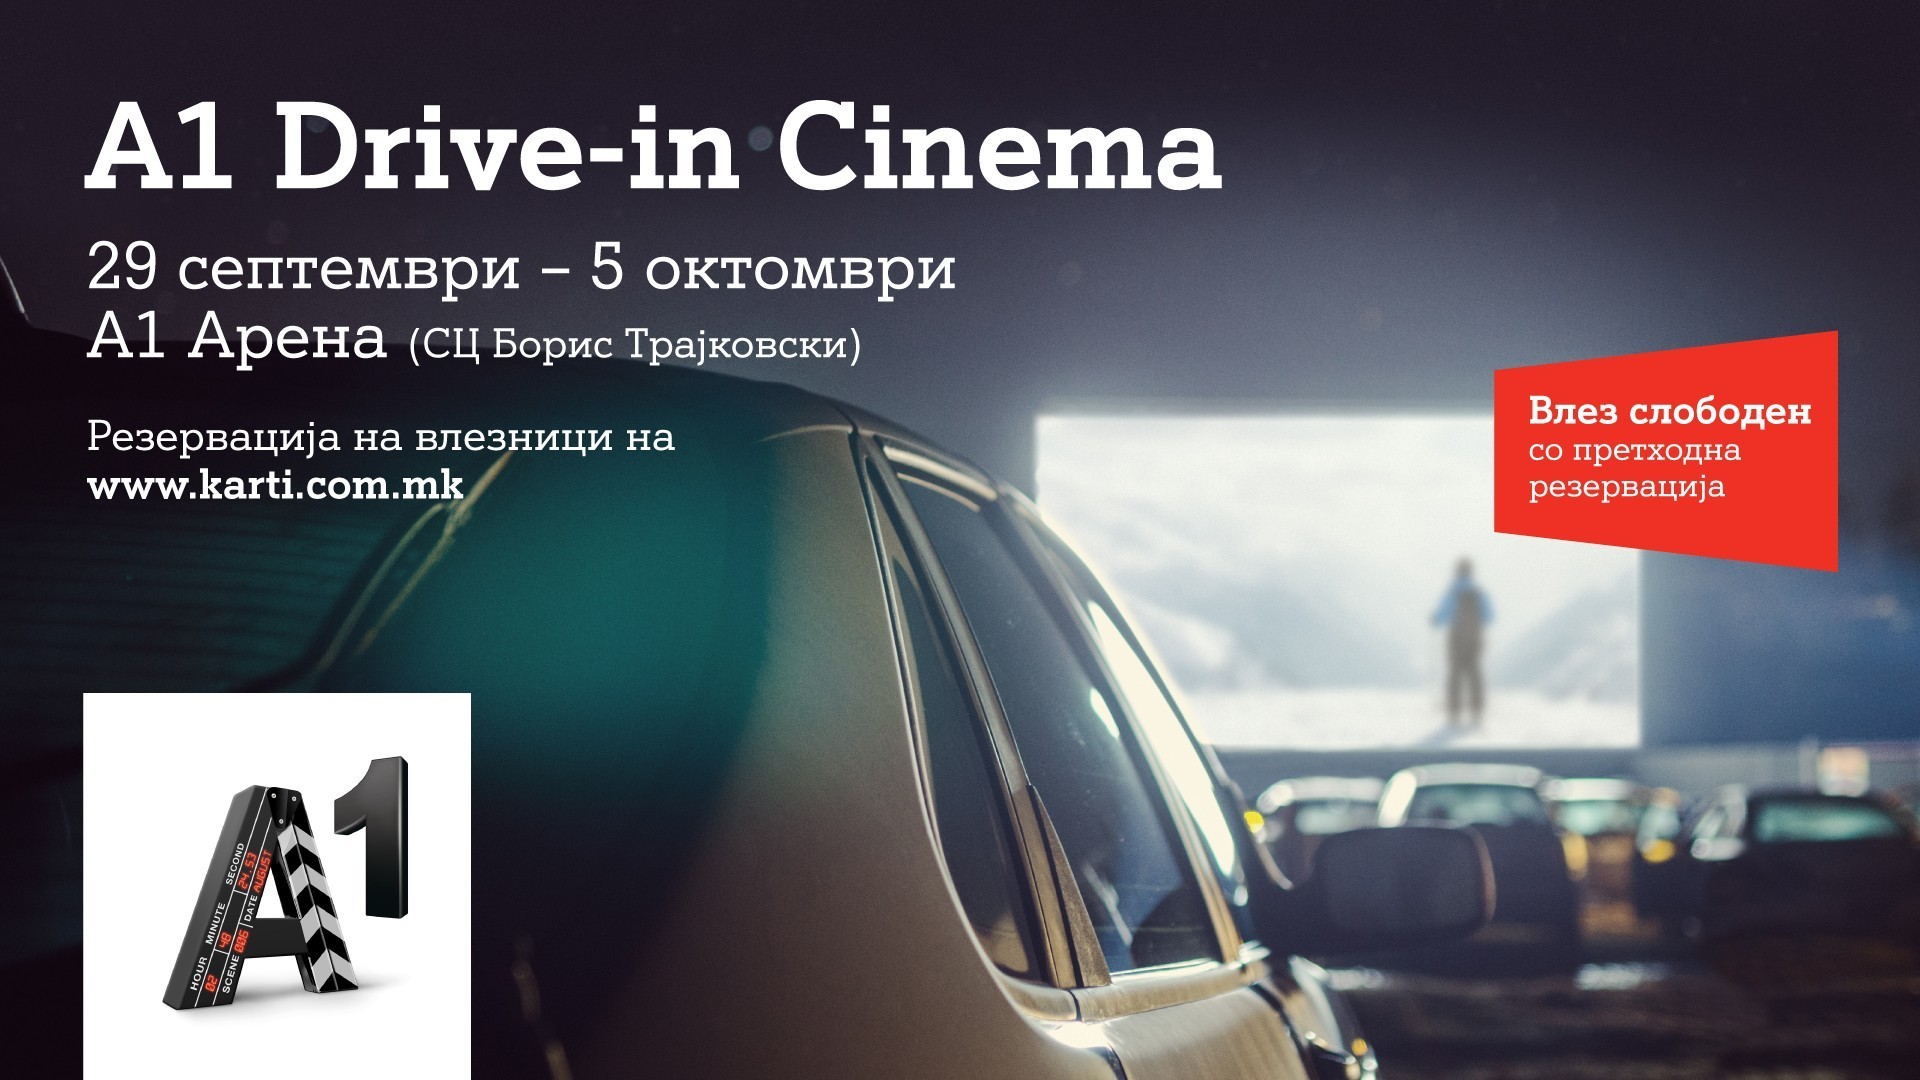 Уникатен настан за љубителите на филмот: A1 Drive-in кино од 29 септември до 5 октомври